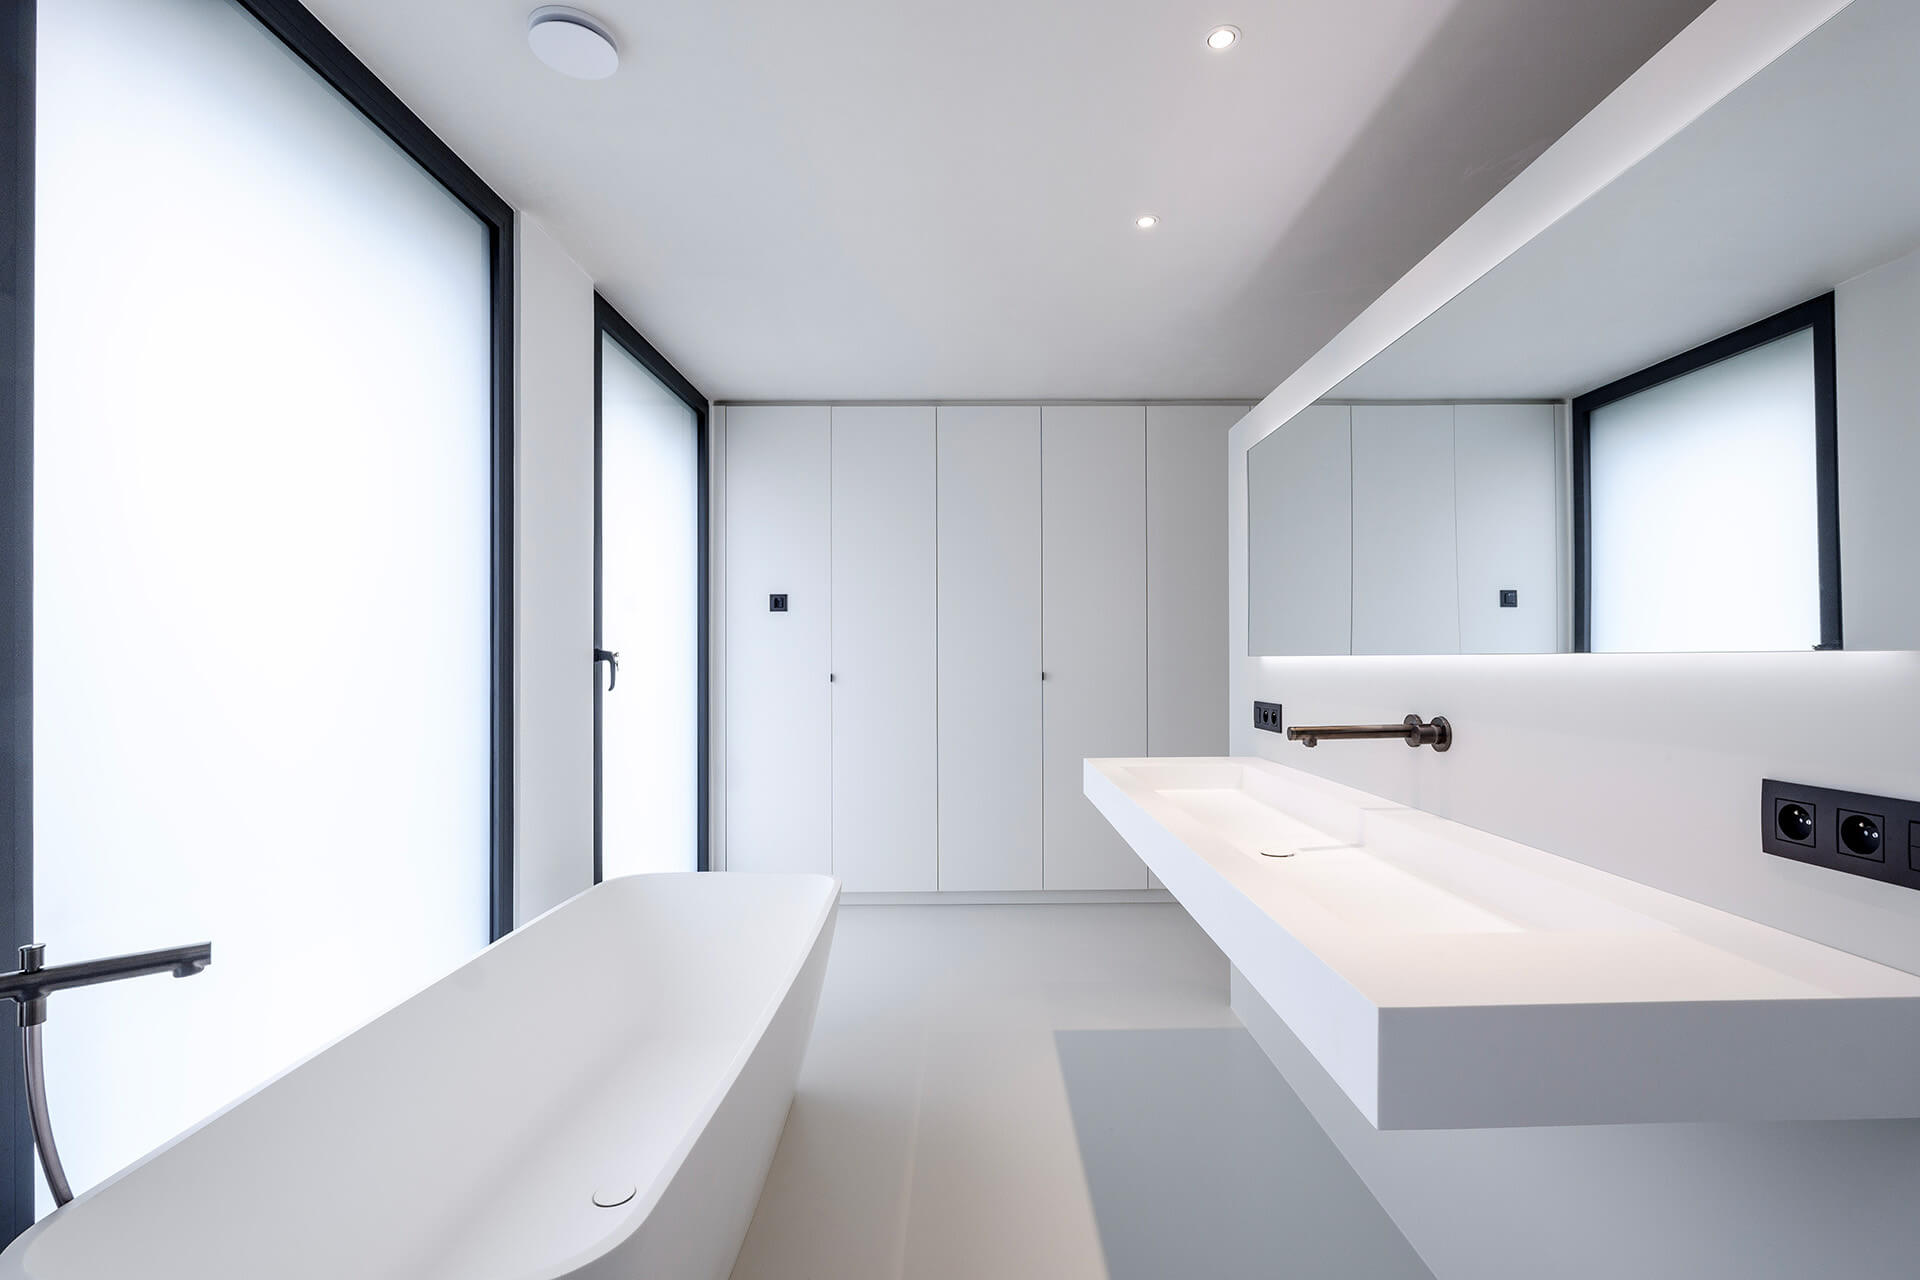 White bathroom storage cabinets made to measure, from maatkasten online